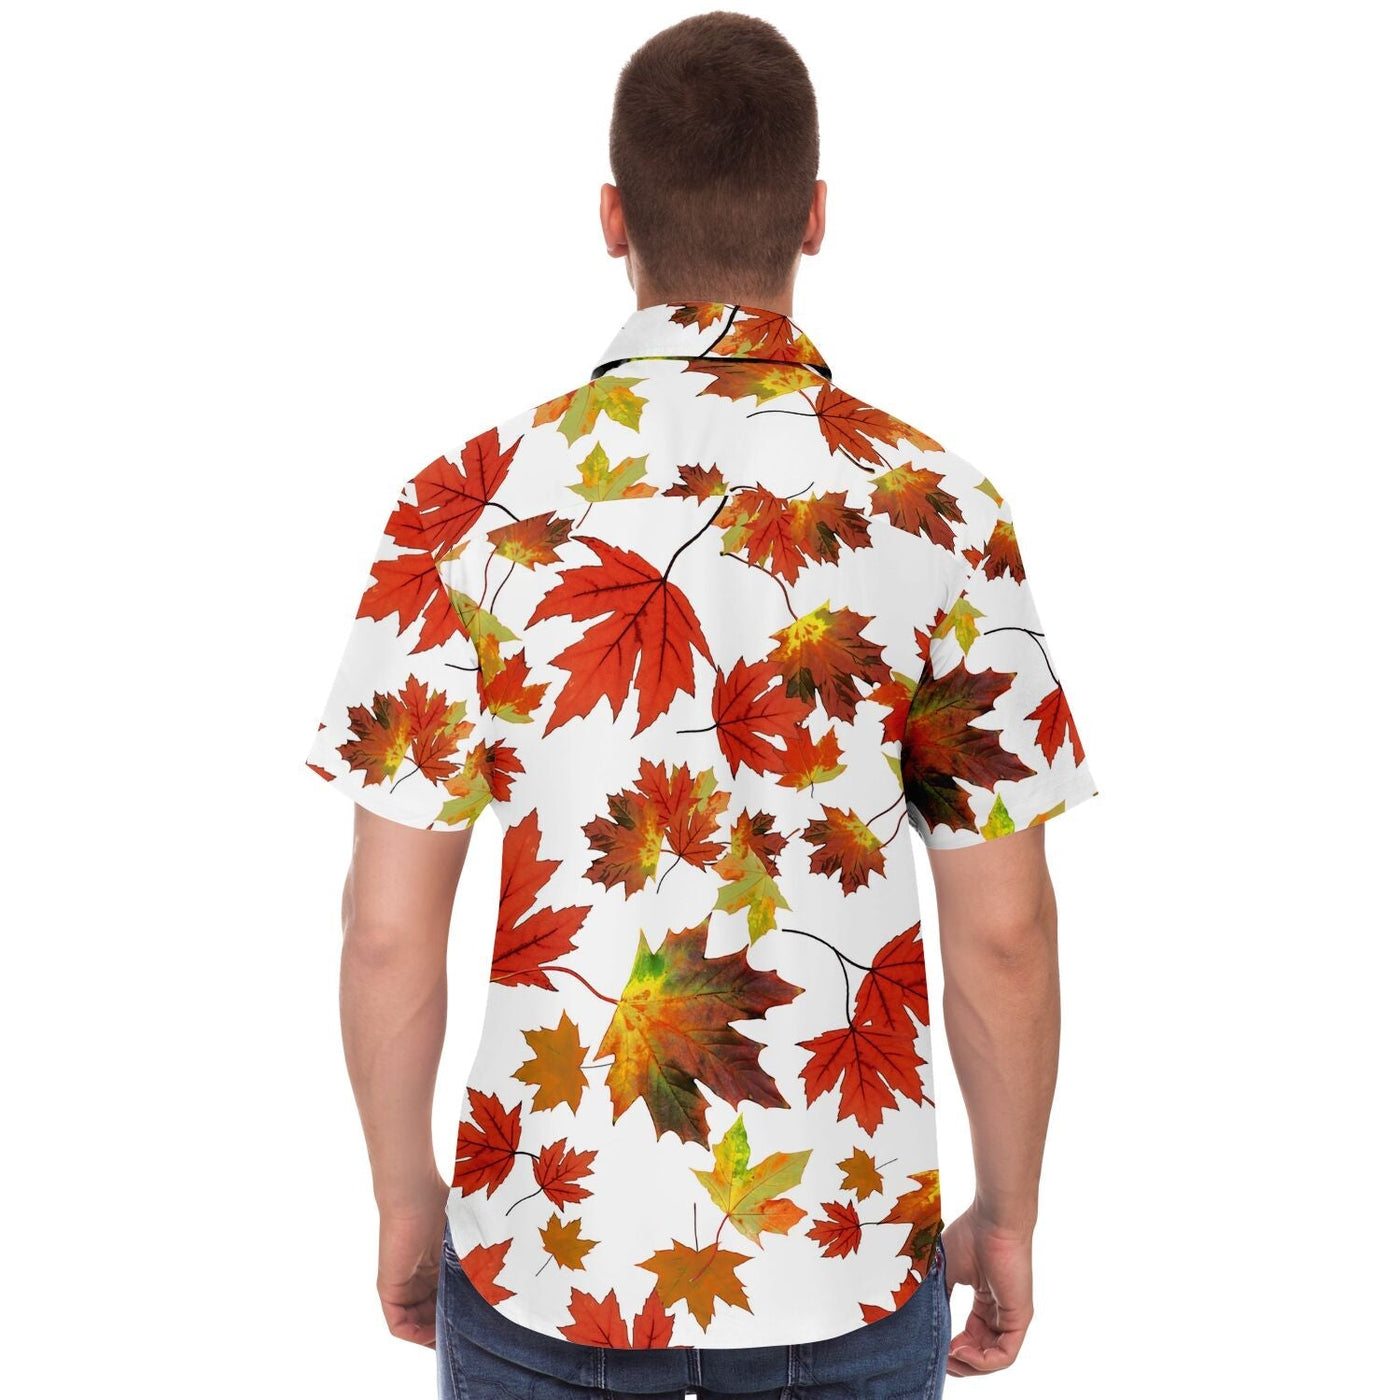 tyler durden maple leaf shirt Graphic T-Shirt for Sale by timyewest